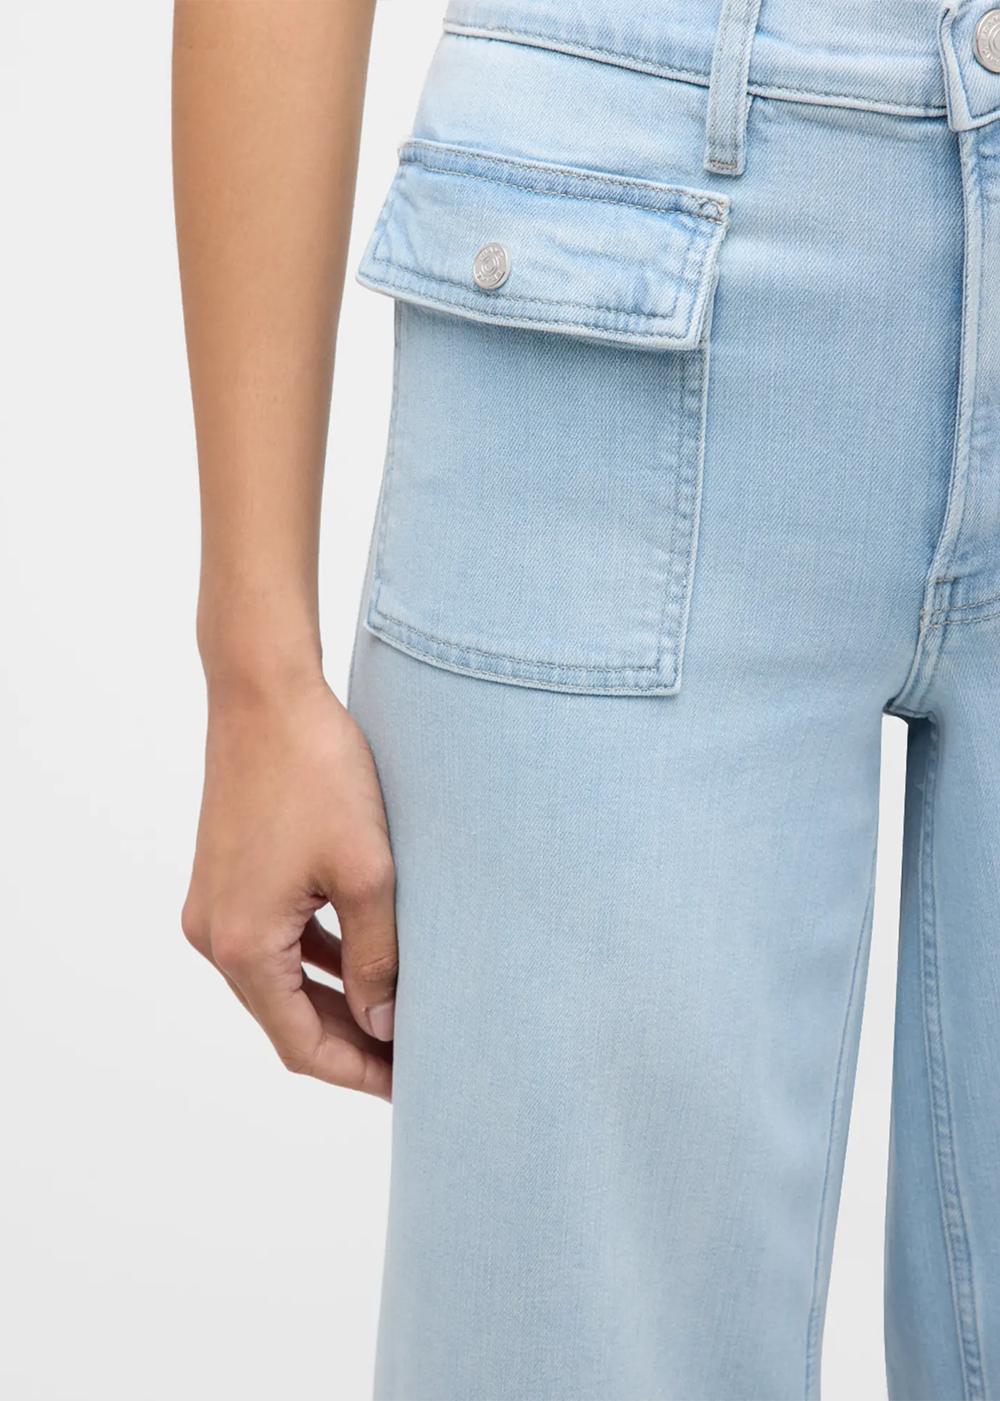 70s Patch Pocket Crop Straight Jean - Clarity - FRAME Denim Canada - Danali